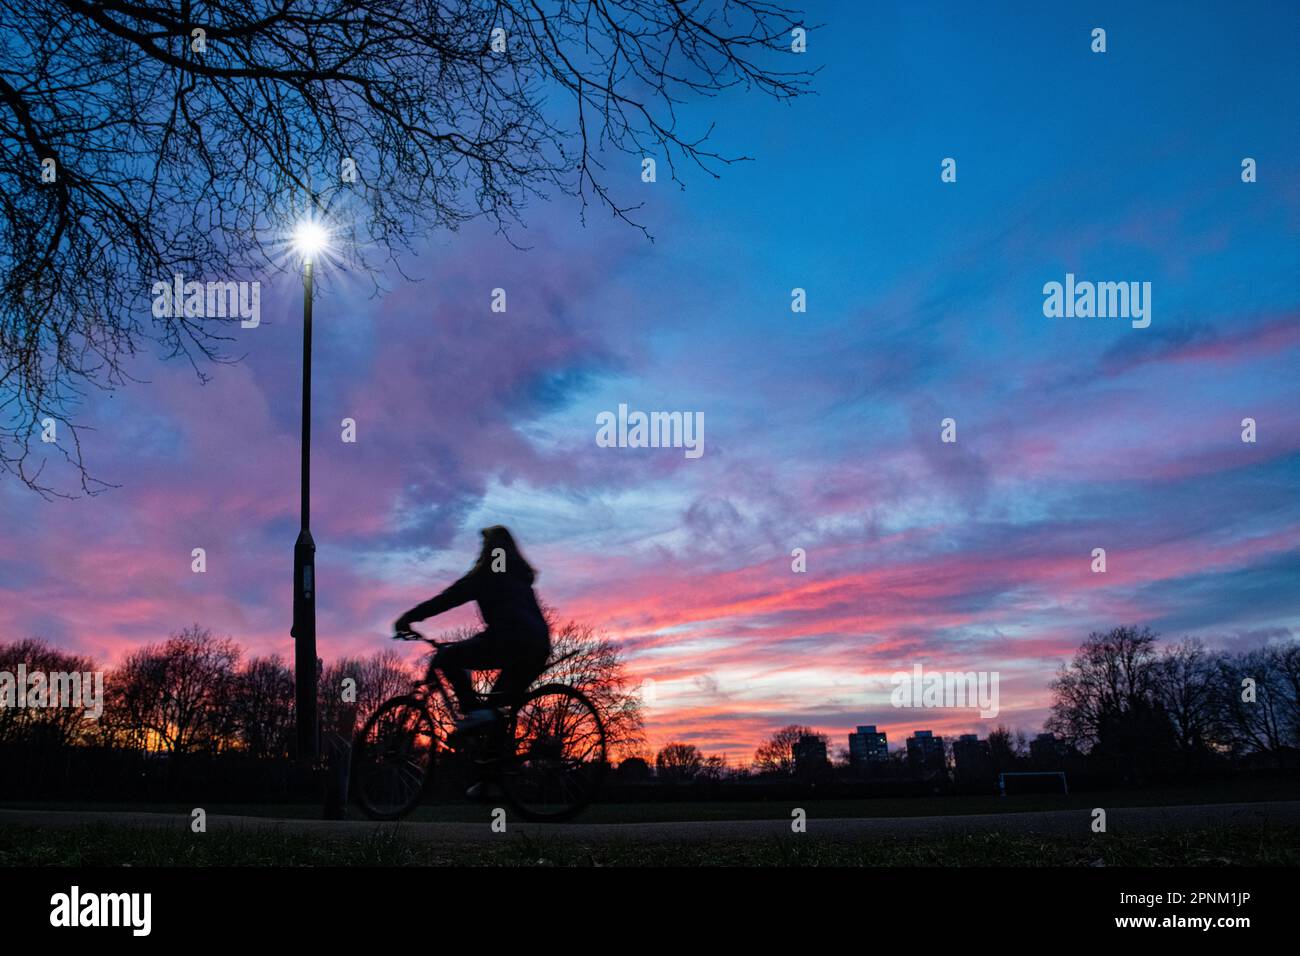 A cyclist rides through a London park at sunset under  street light Stock Photo